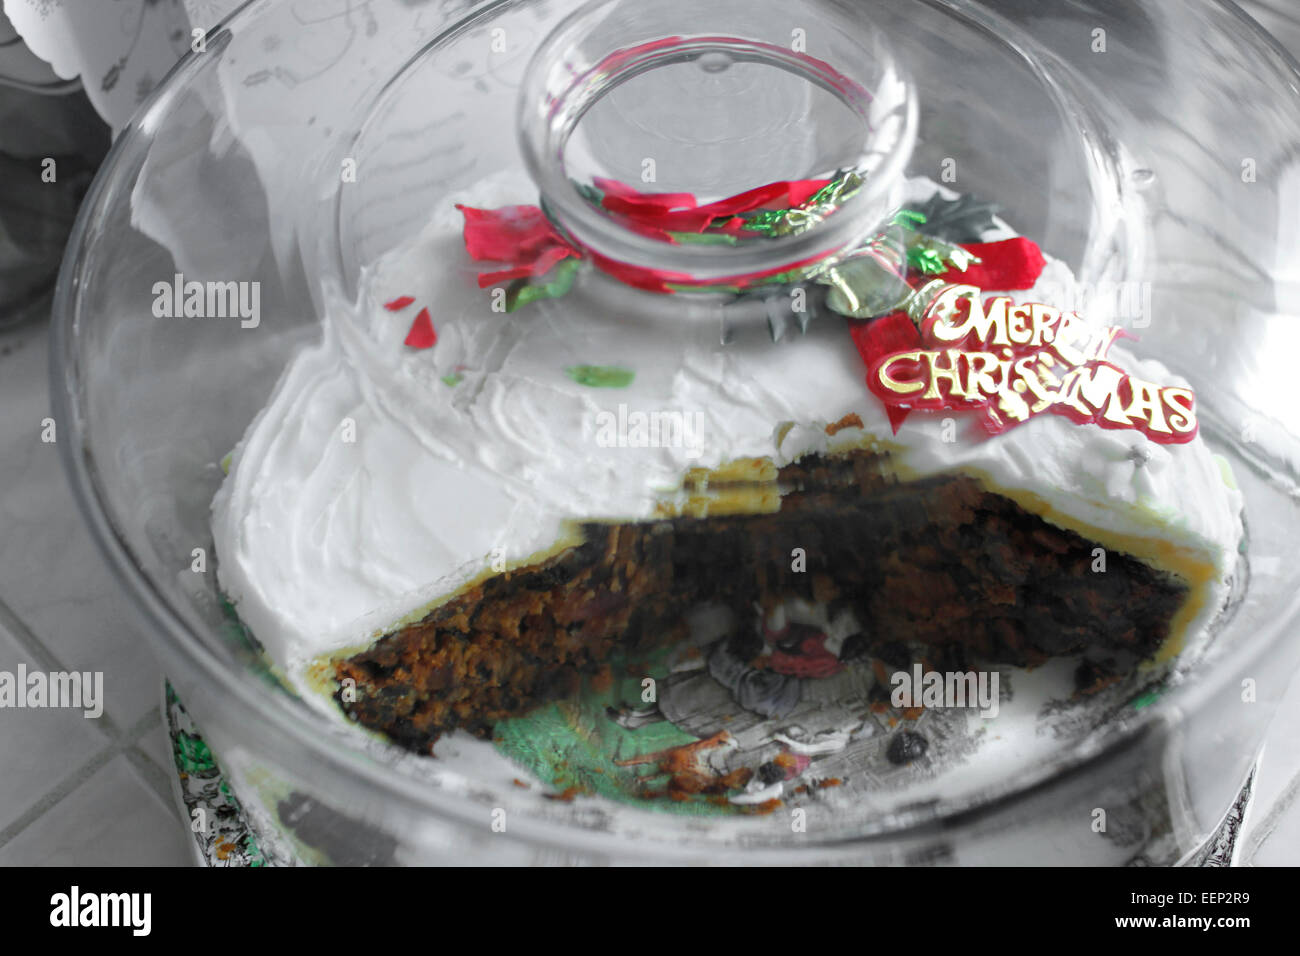 Part eaten rich fruit Christmas cake under glass dome Stock Photo